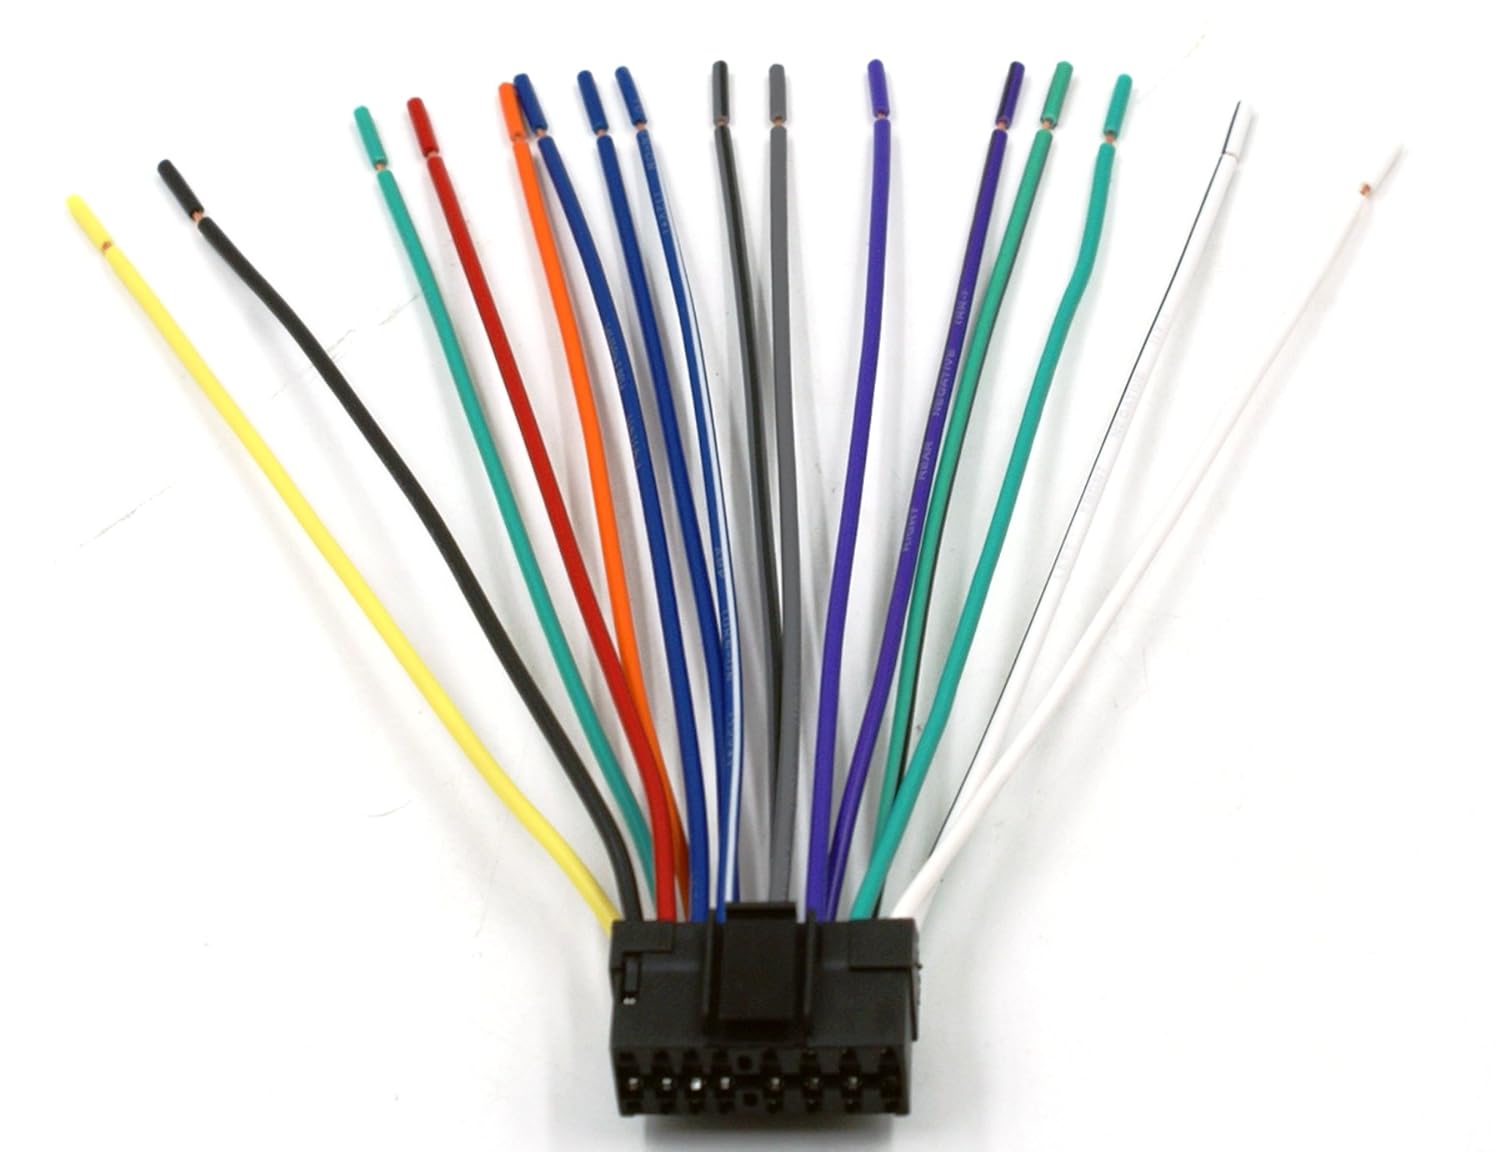 sony cdx gt420ip wiring diagram